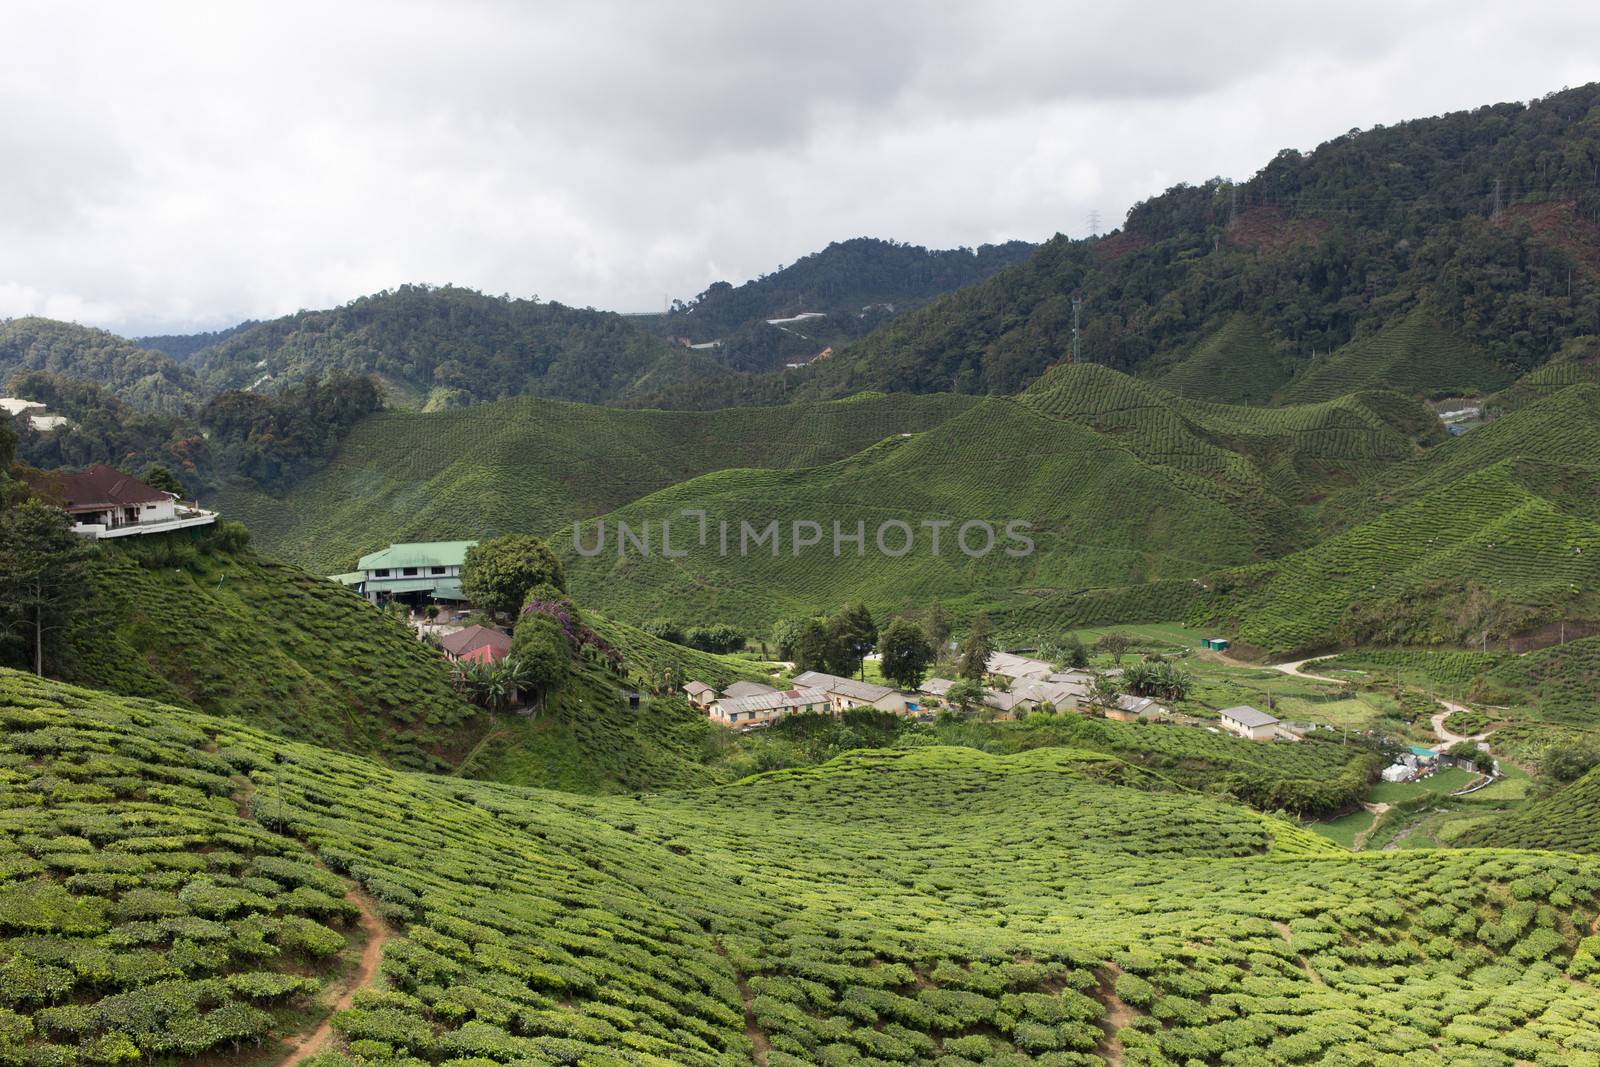 Landscape of Tea Field in Cameron Highlands, Malaysia